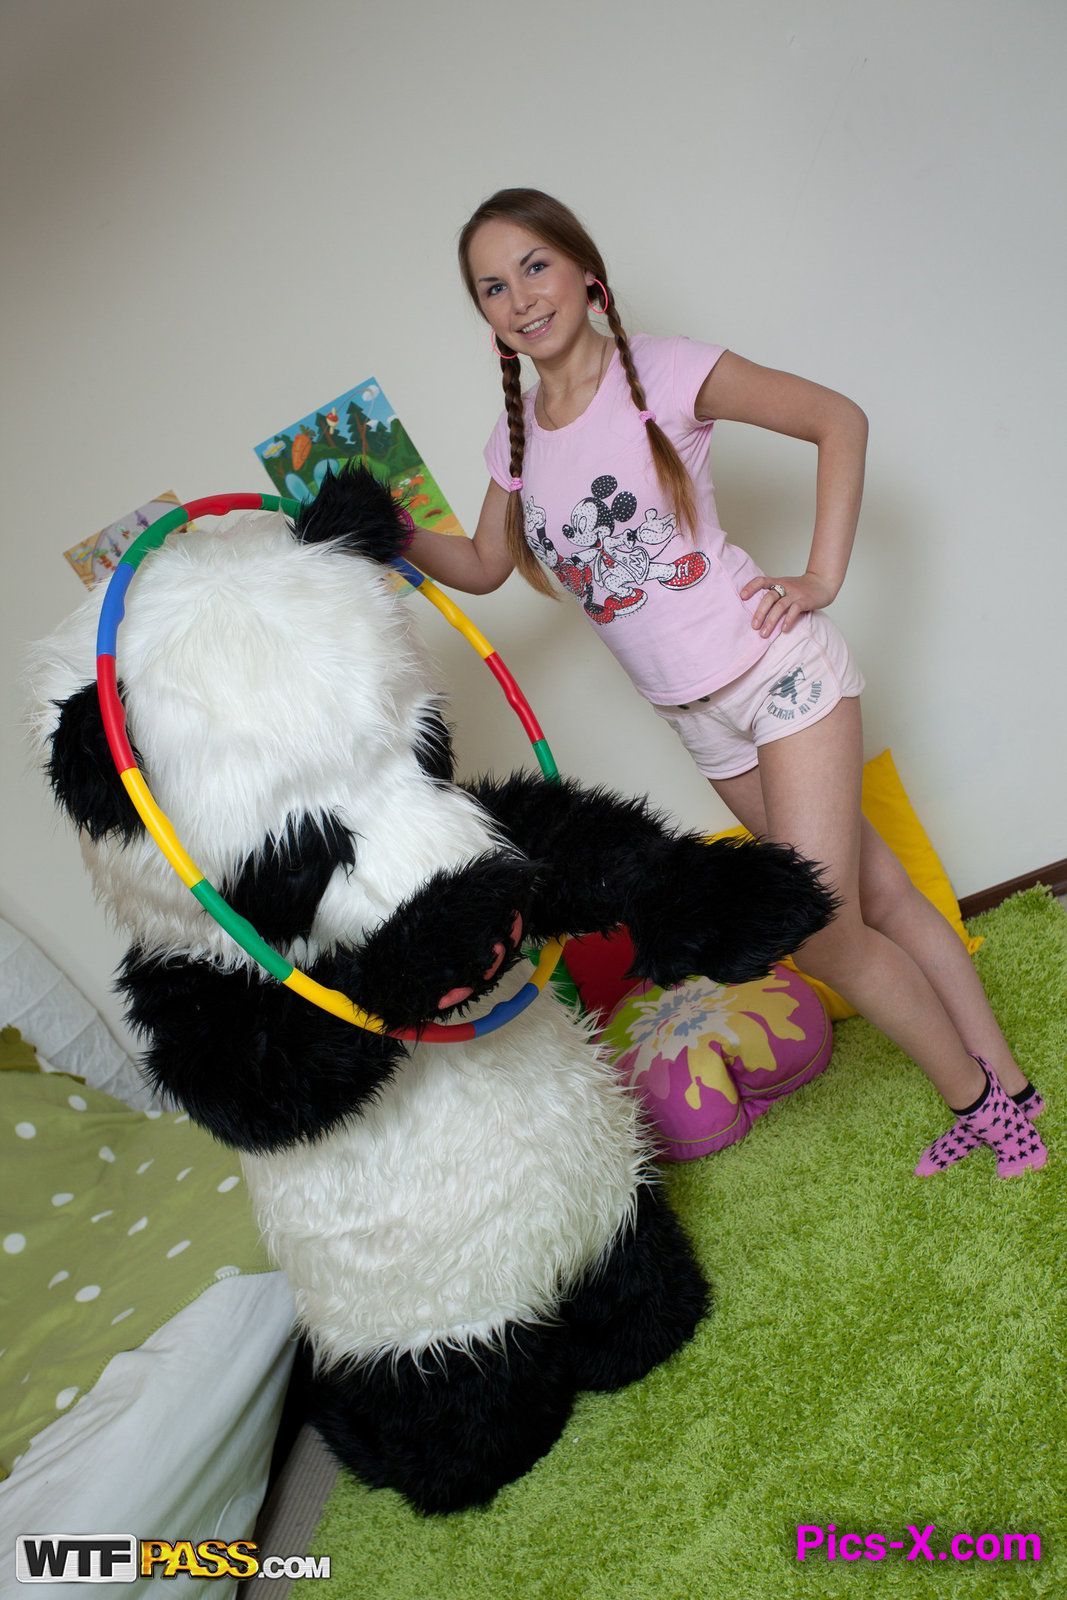 Fun sex things to do with panda - Panda Fuck - Image 10